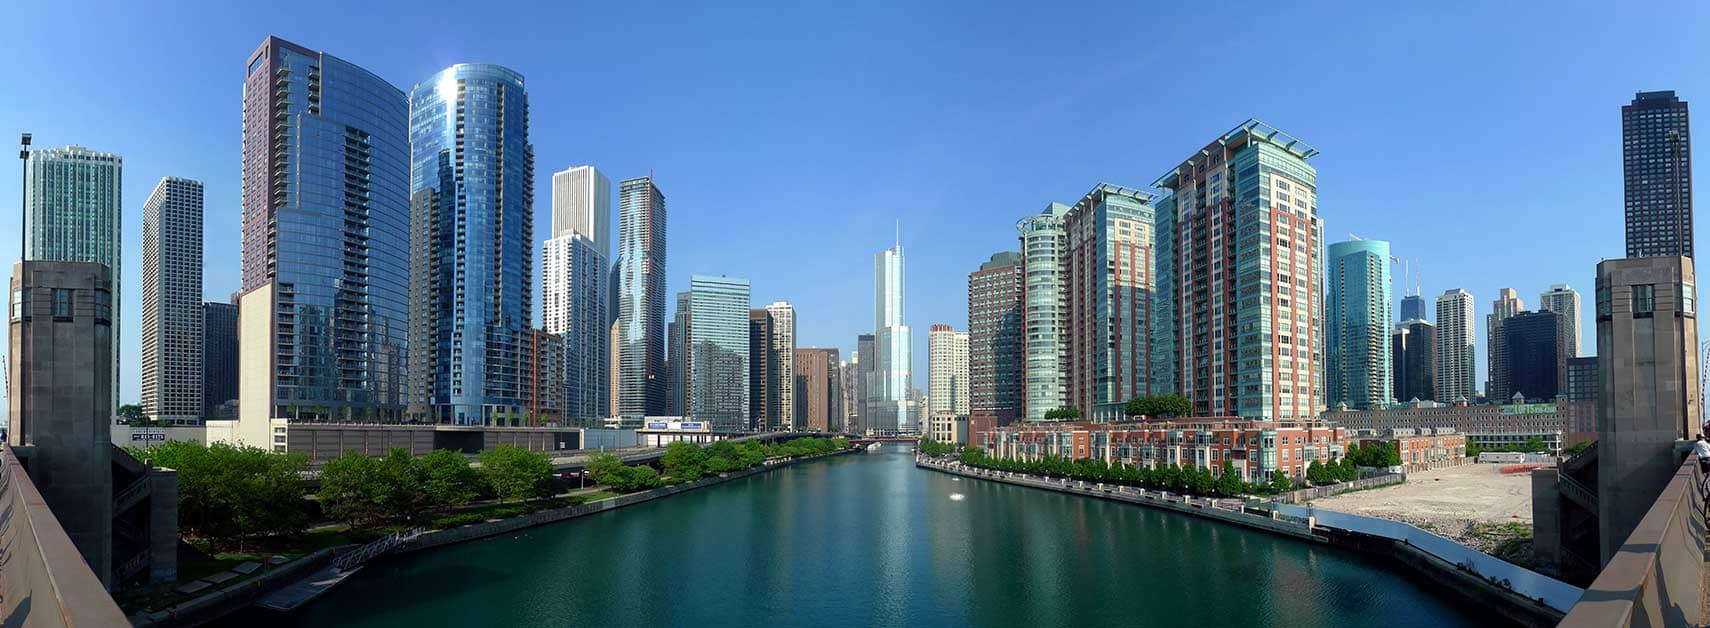 United States - Chicago